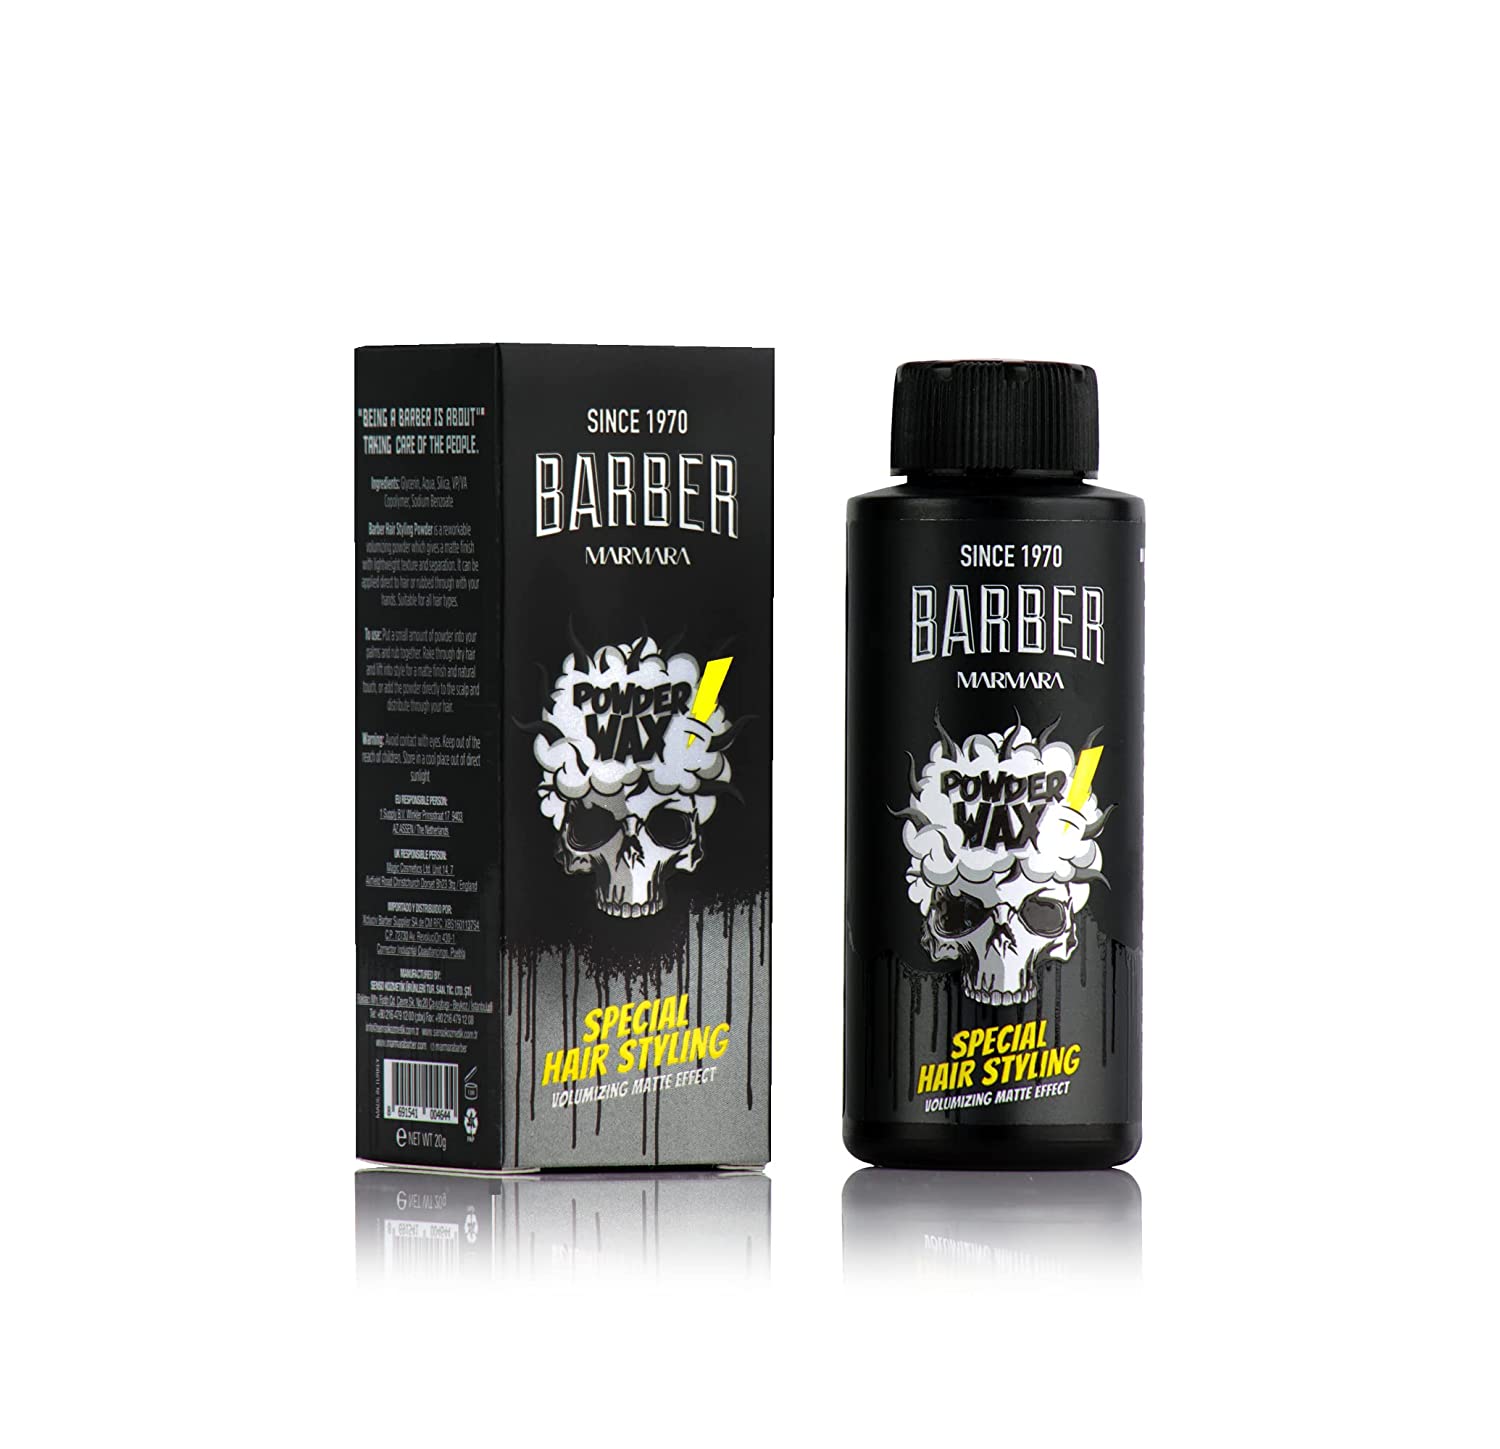 BARBER MARMARA Hair Powder Men 20 g | Hair Powder with Matte Effect for Women and Men | Styling Powder Matte Look | Hair Styling | Modelling Styling Powder | Barber Shop Matte Powder | Volume Powder